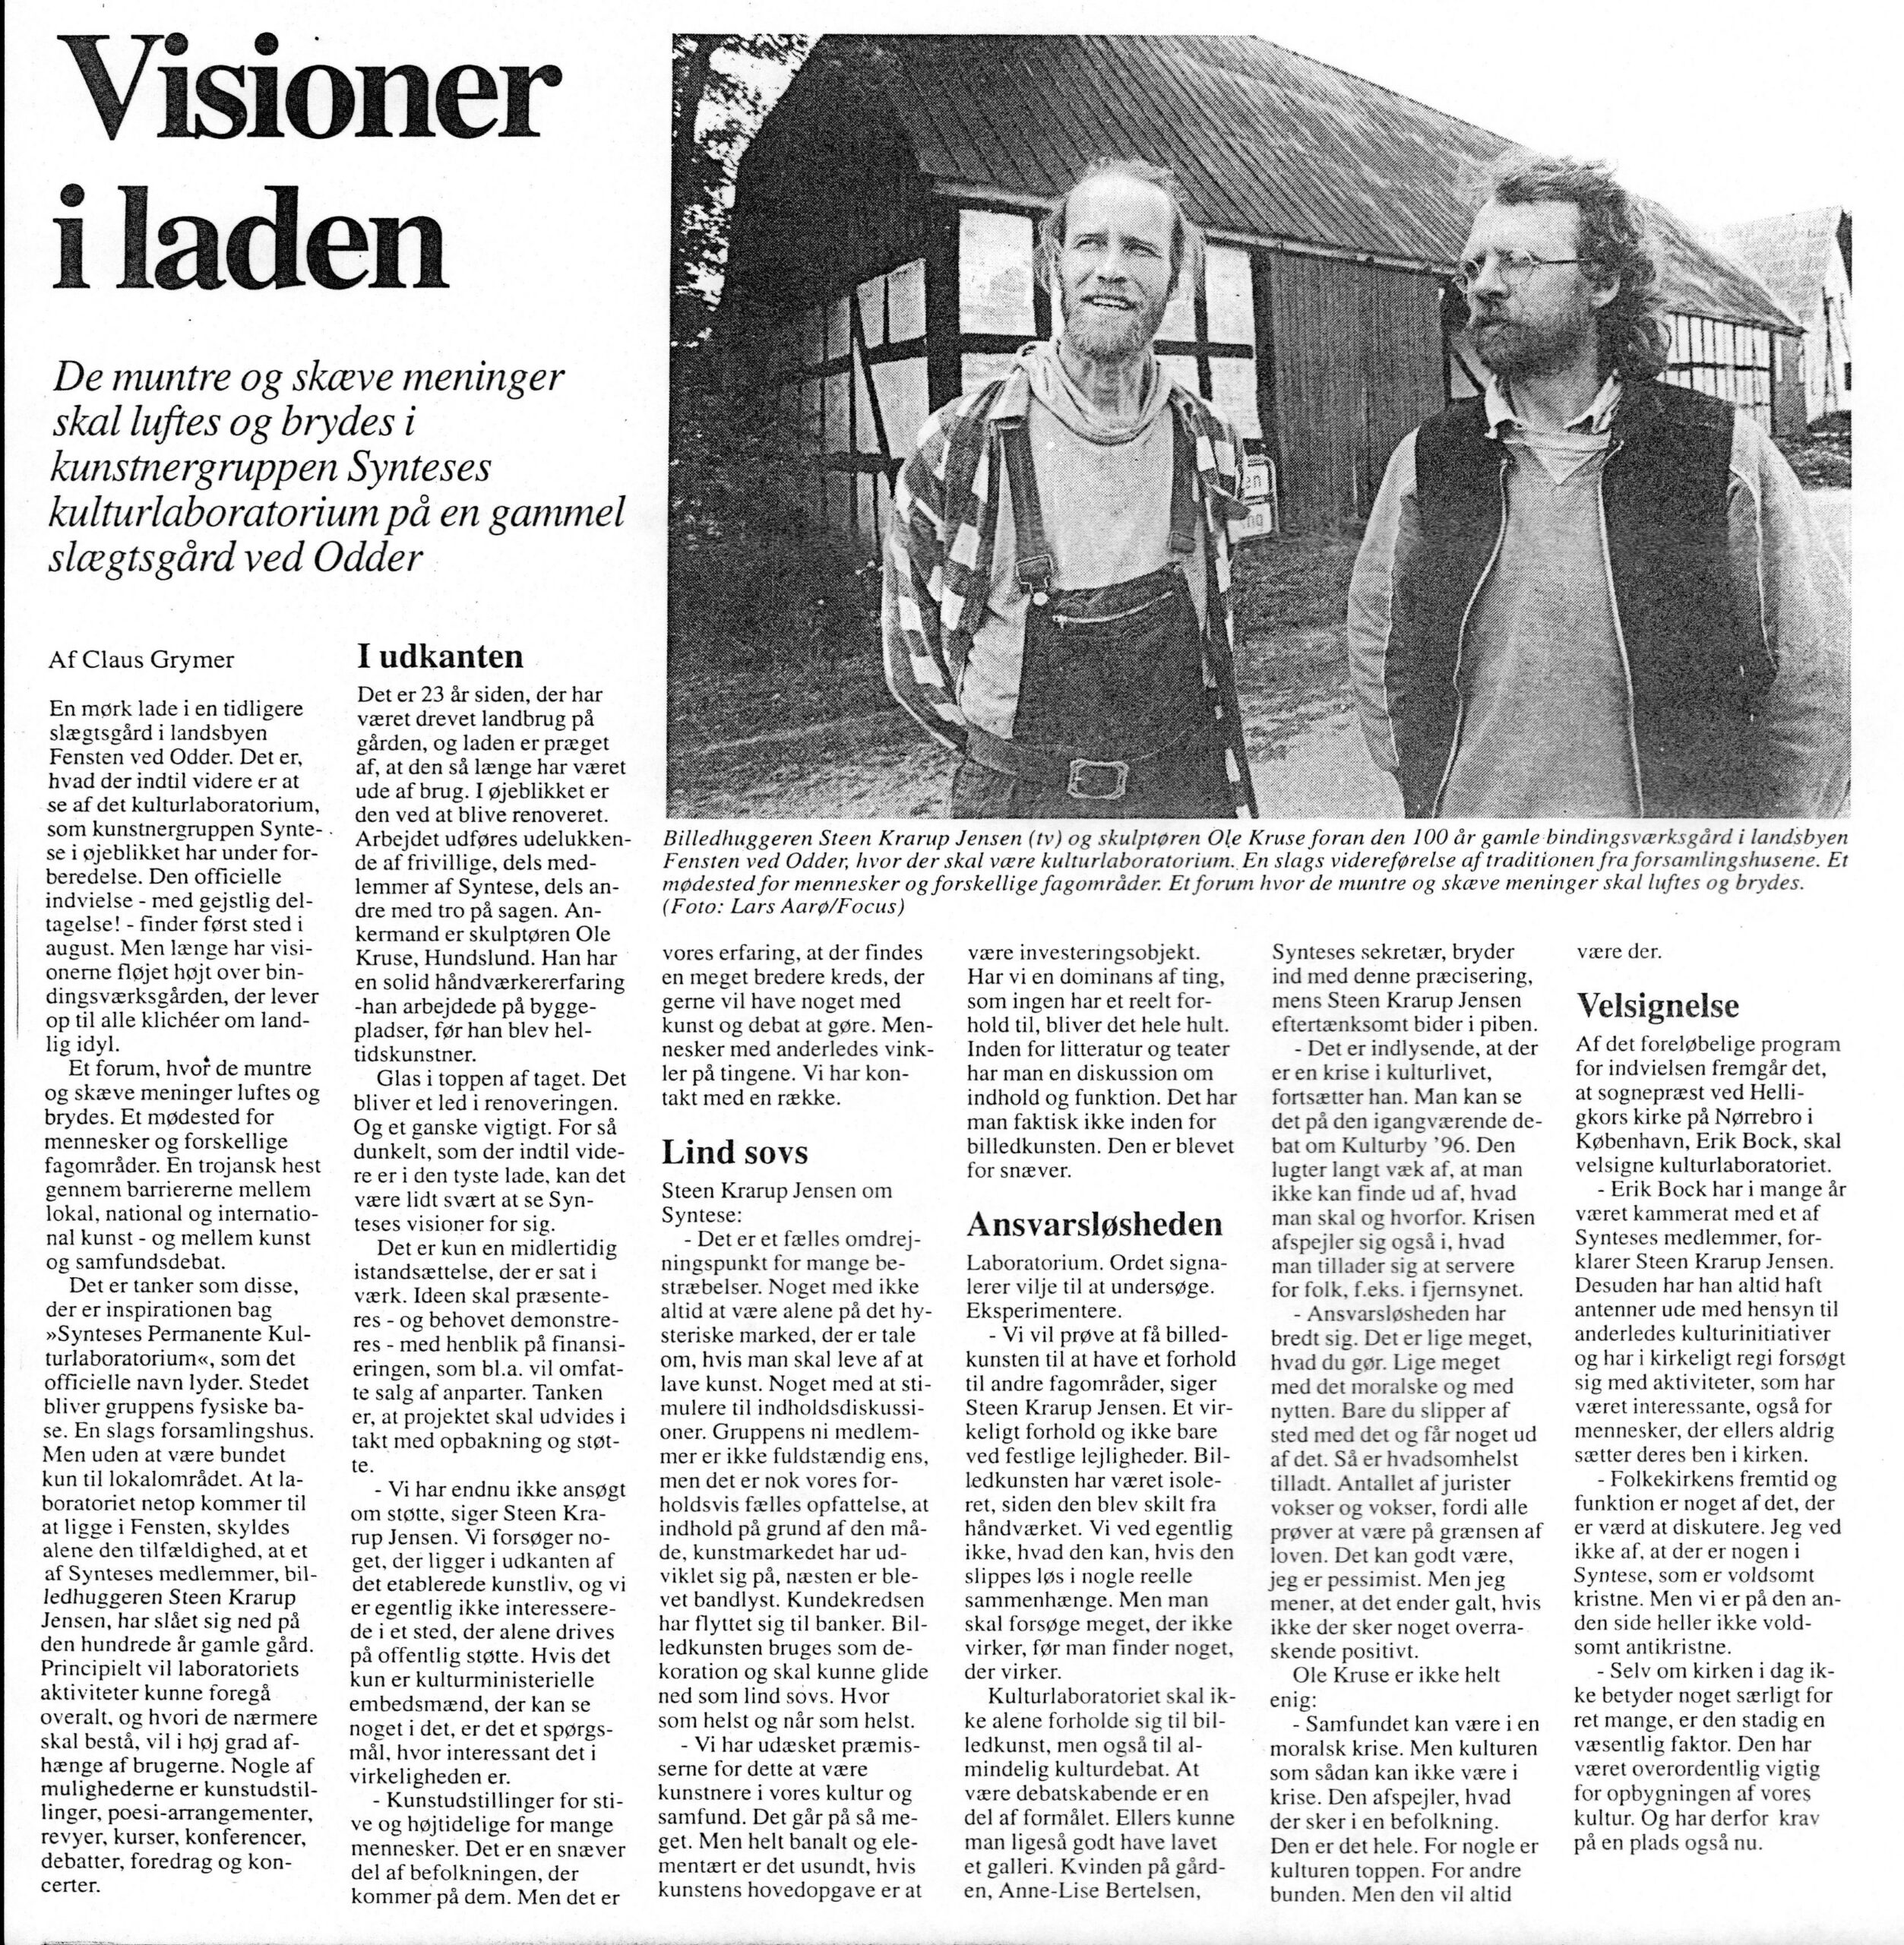 Visioner i laden. Omtale (Synteses Permanente Kulturlaboratorium, Fensten 1994). Claus Grymer. Kristeligt Dagblad.